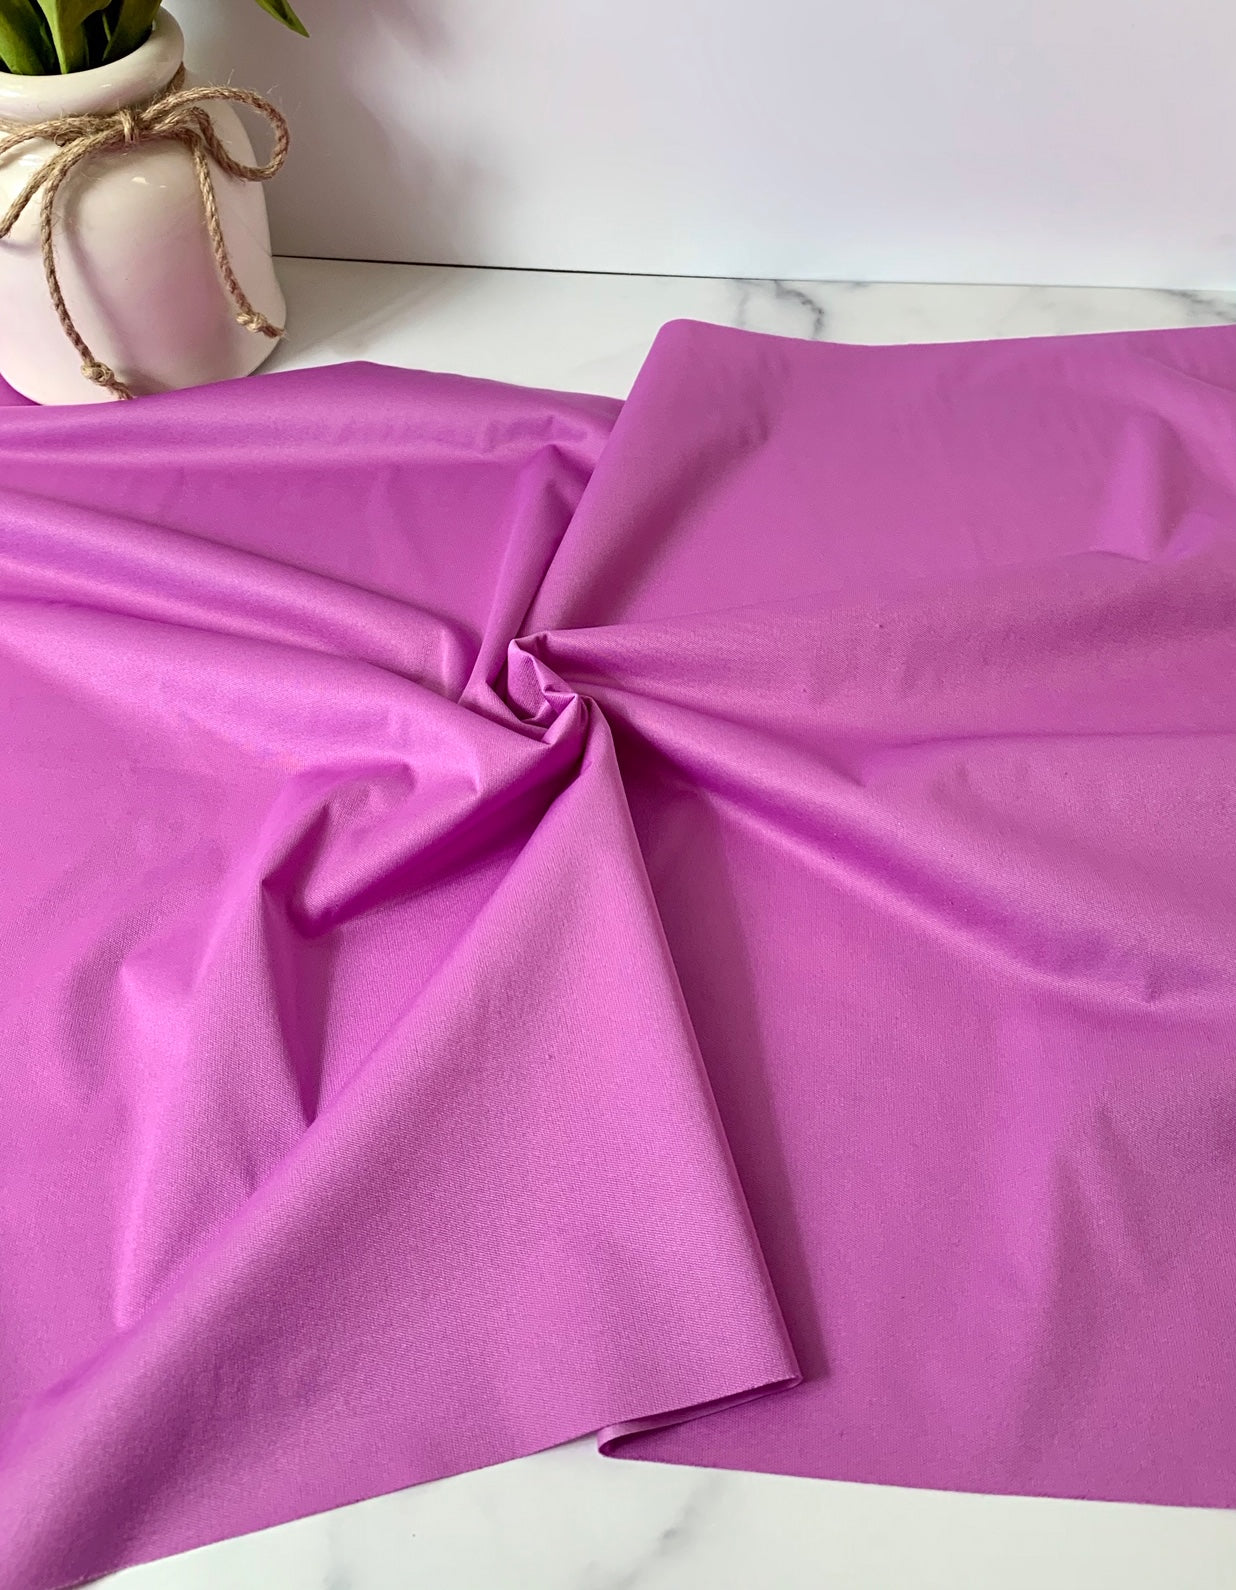 Violet PUL Fabric